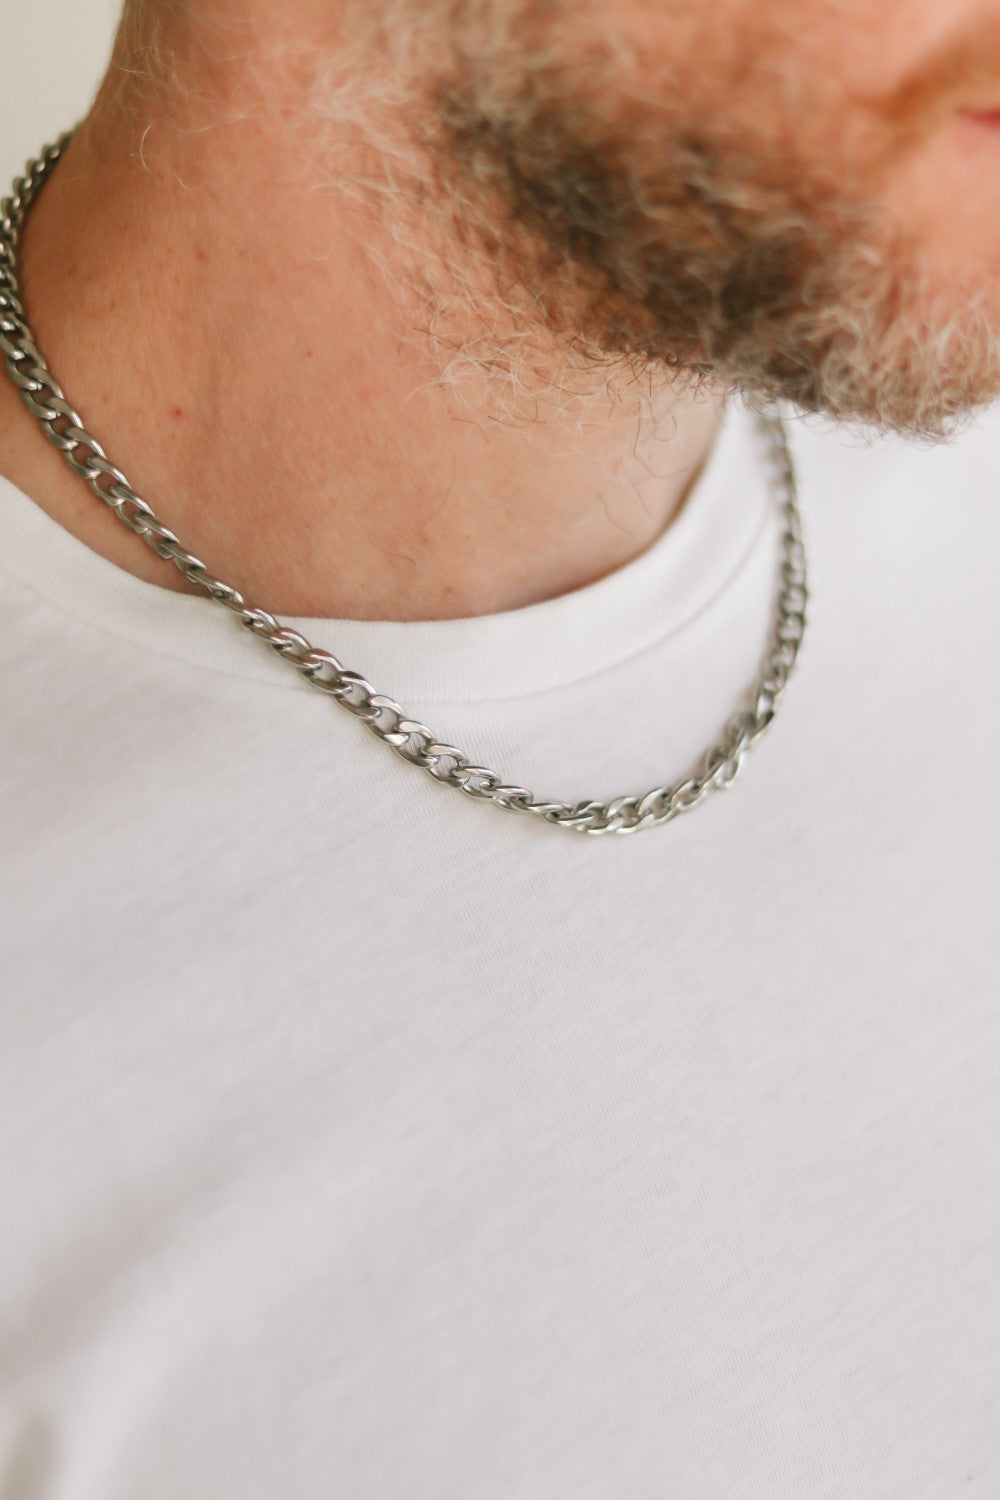 GANG SHI DAI Mens Boys Necklace Chain Pendant India | Ubuy